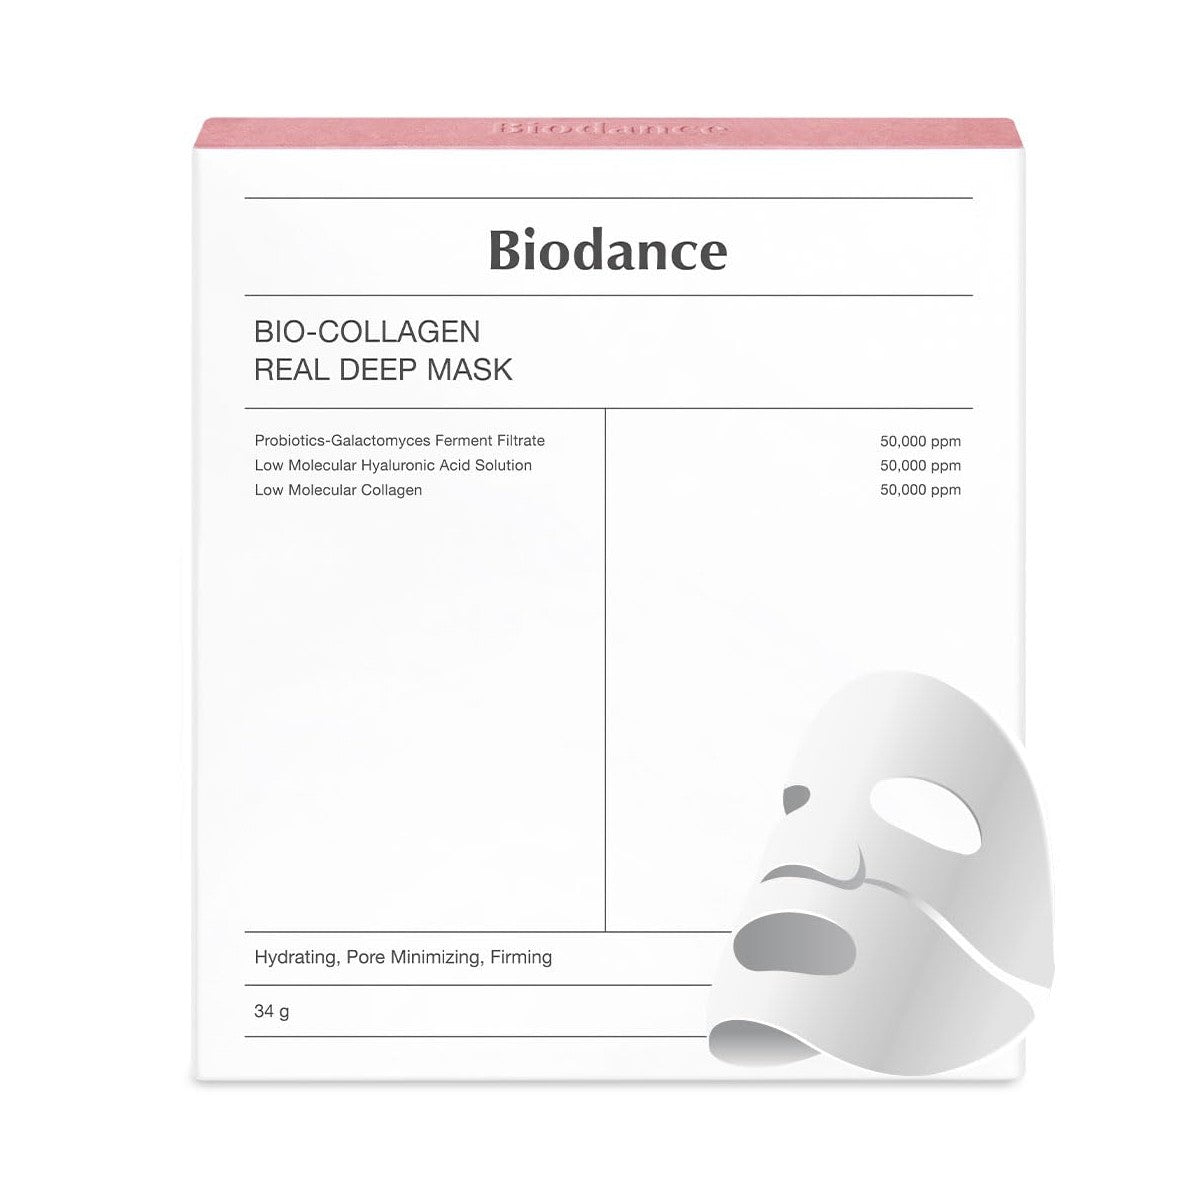 Biodance Bio-collagen Real Deep Sheet Mask